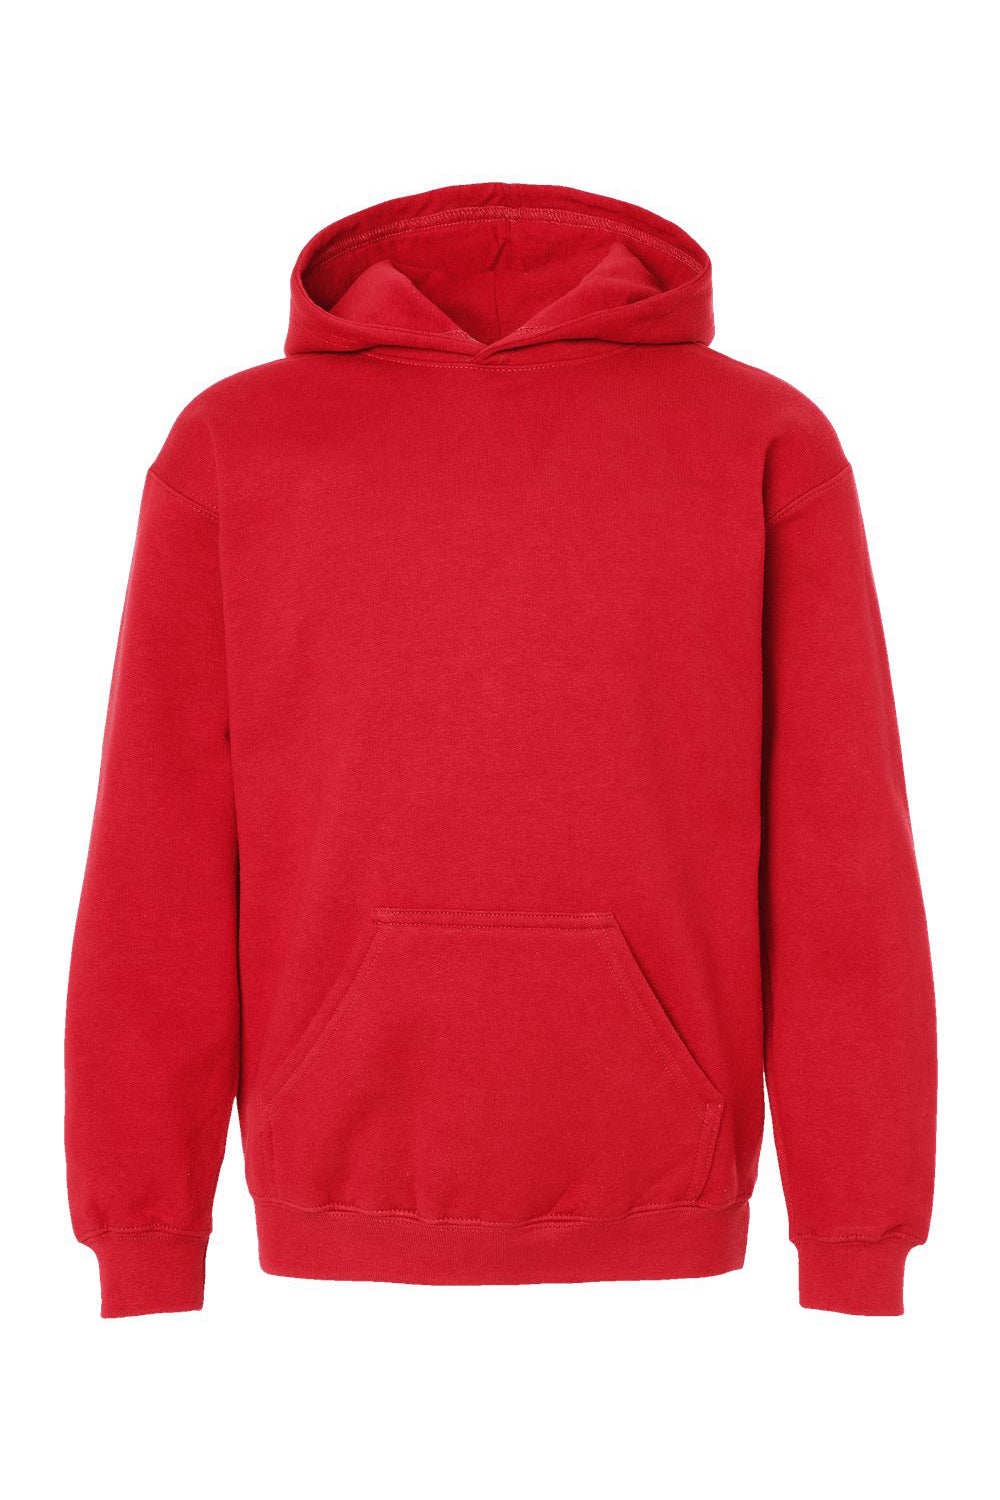 Tultex 320Y Youth Hooded Sweatshirt Hoodie Red Flat Front